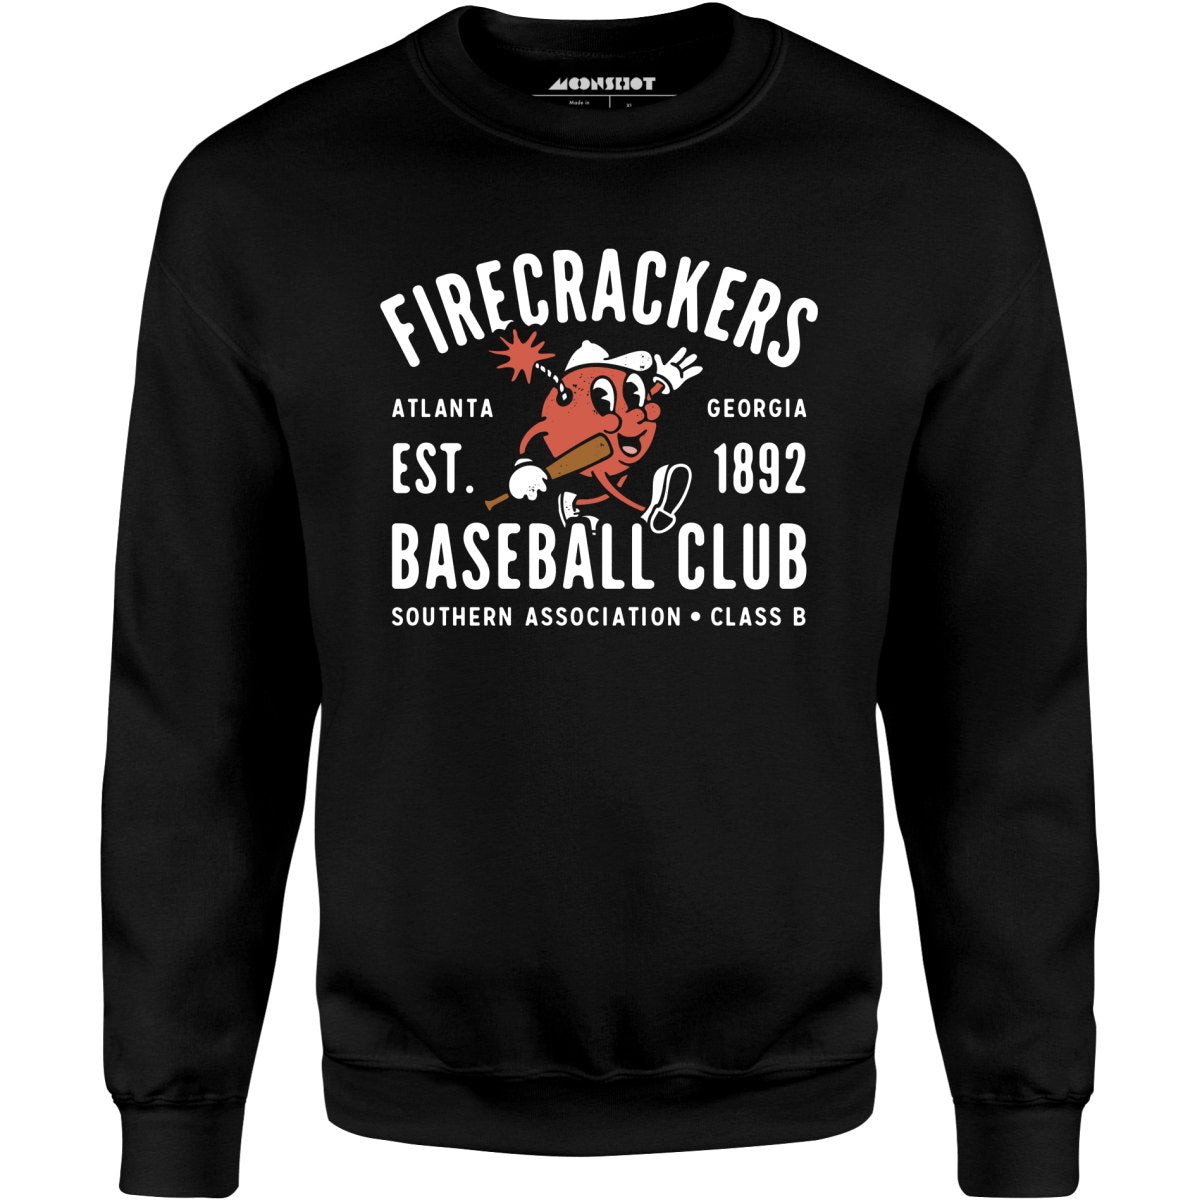 Atlanta Firecrackers - Georgia - Vintage Defunct Baseball Teams - Unisex Sweatshirt